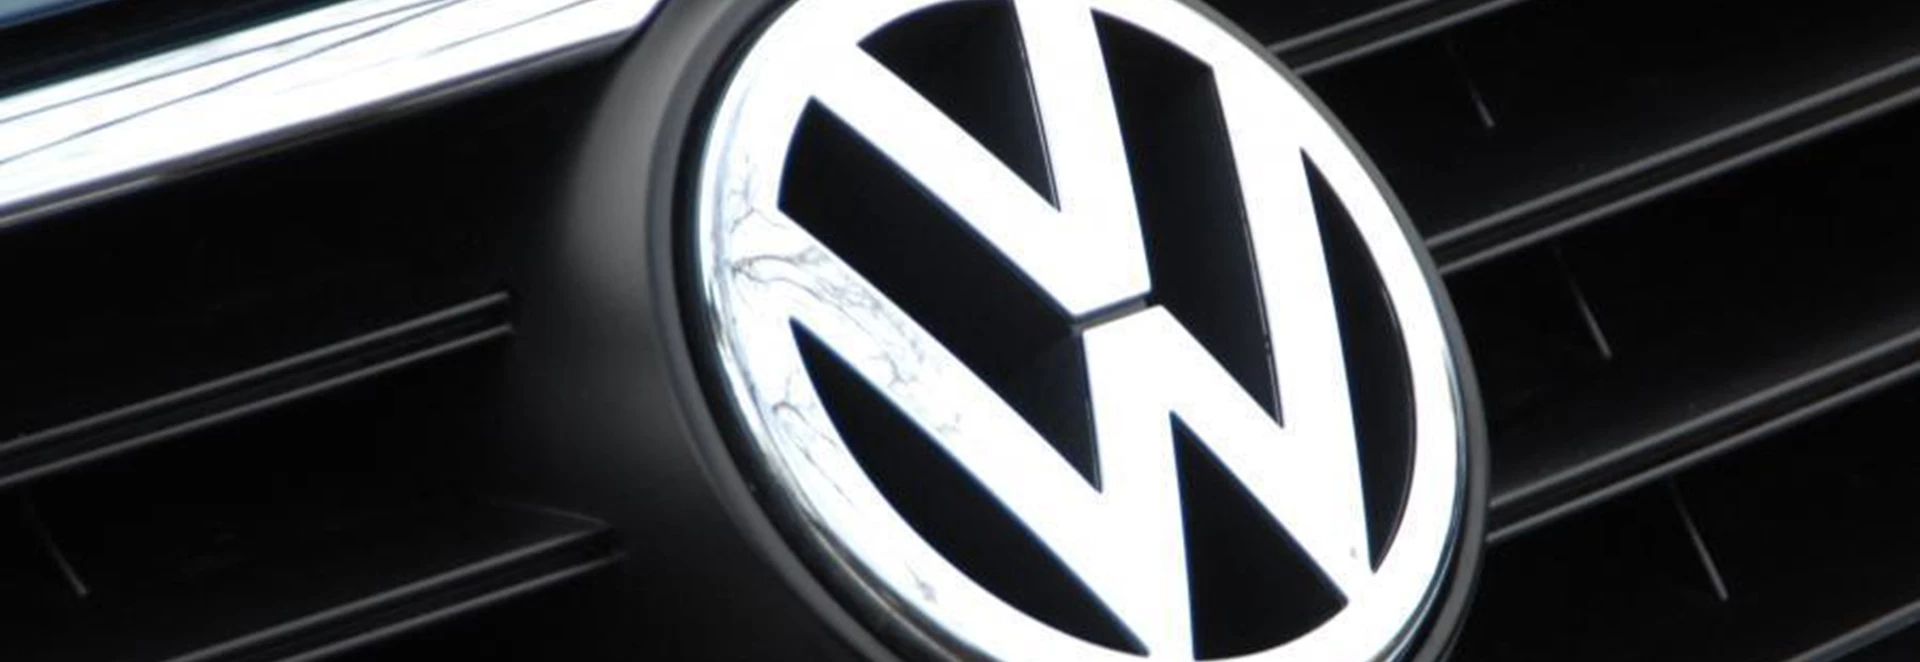 Volkswagen in $15.3bn US 'dieselgate' Emissions Payout 